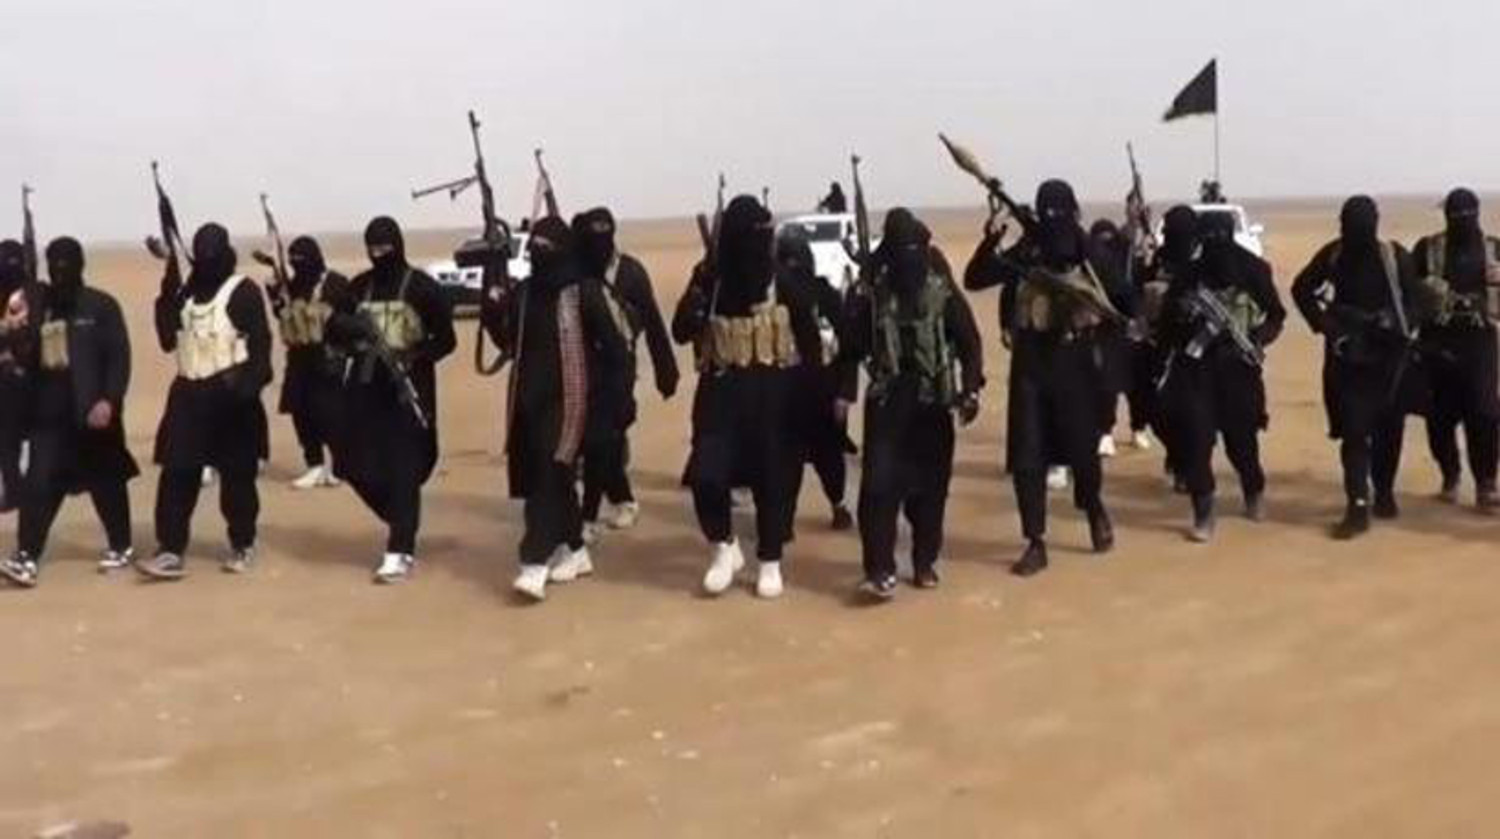 L’UA craint un retour des djihadistes africains de l’État islamique dans le Sahel